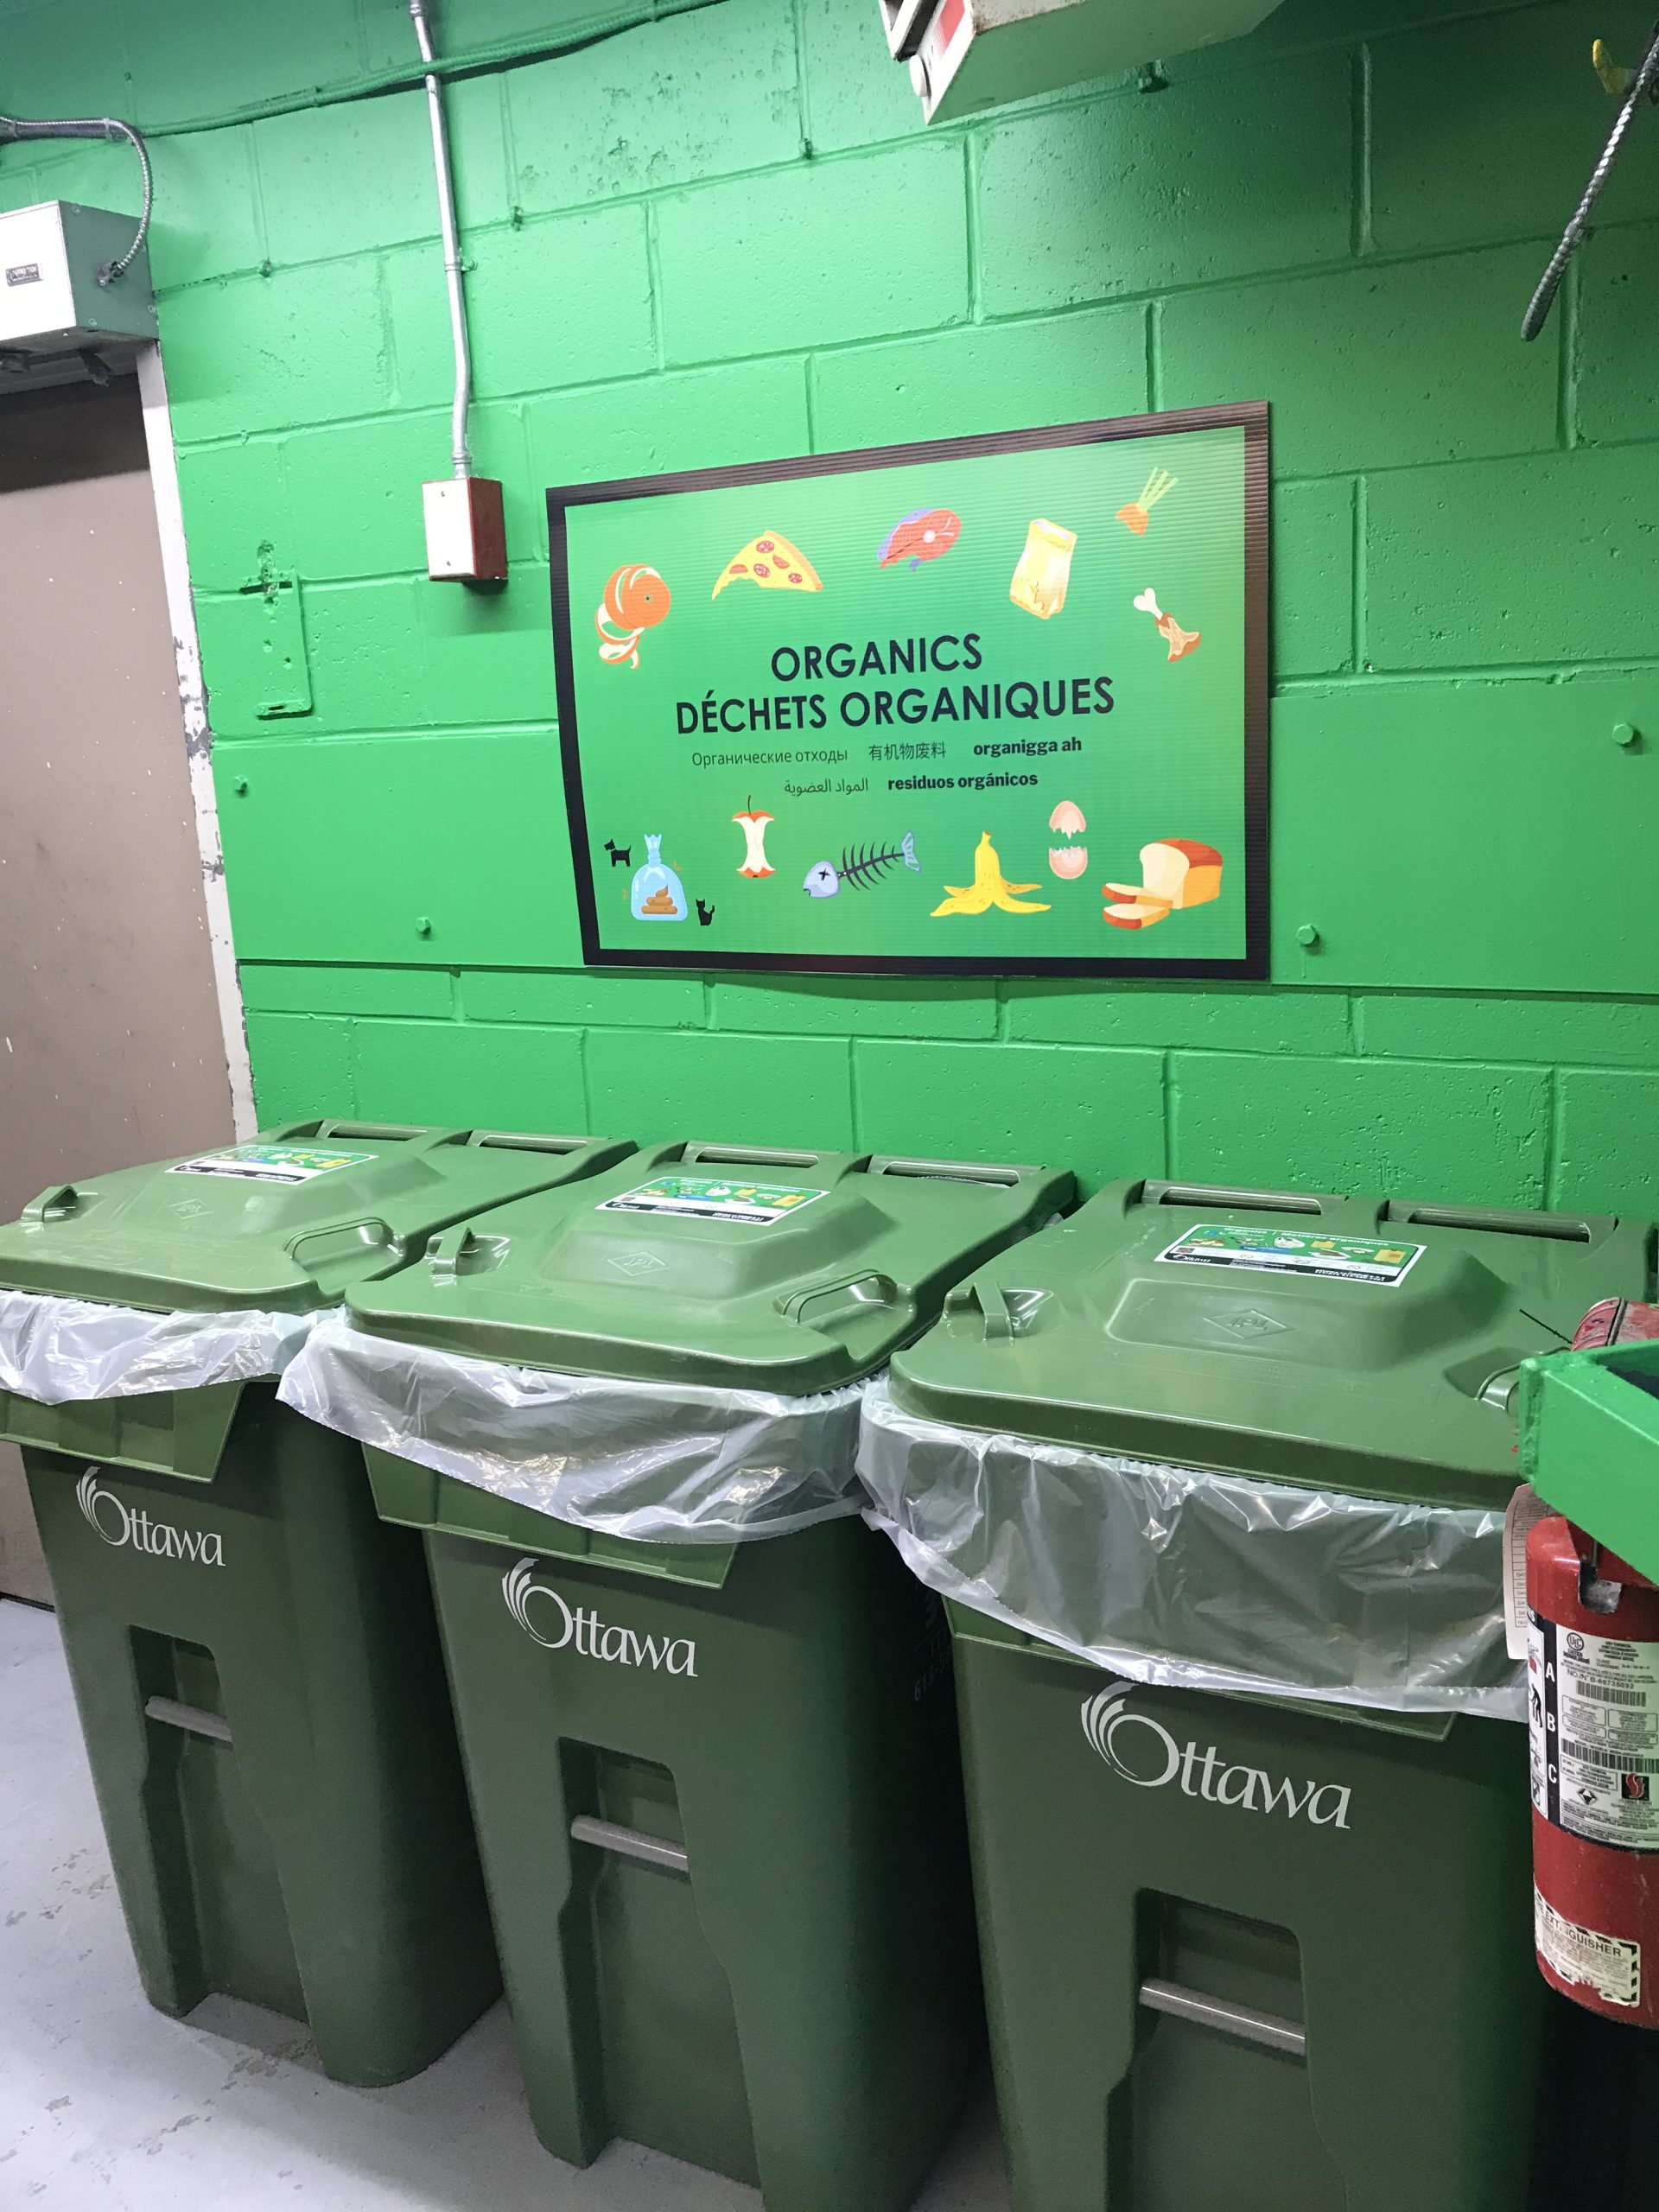 Nepean green bins